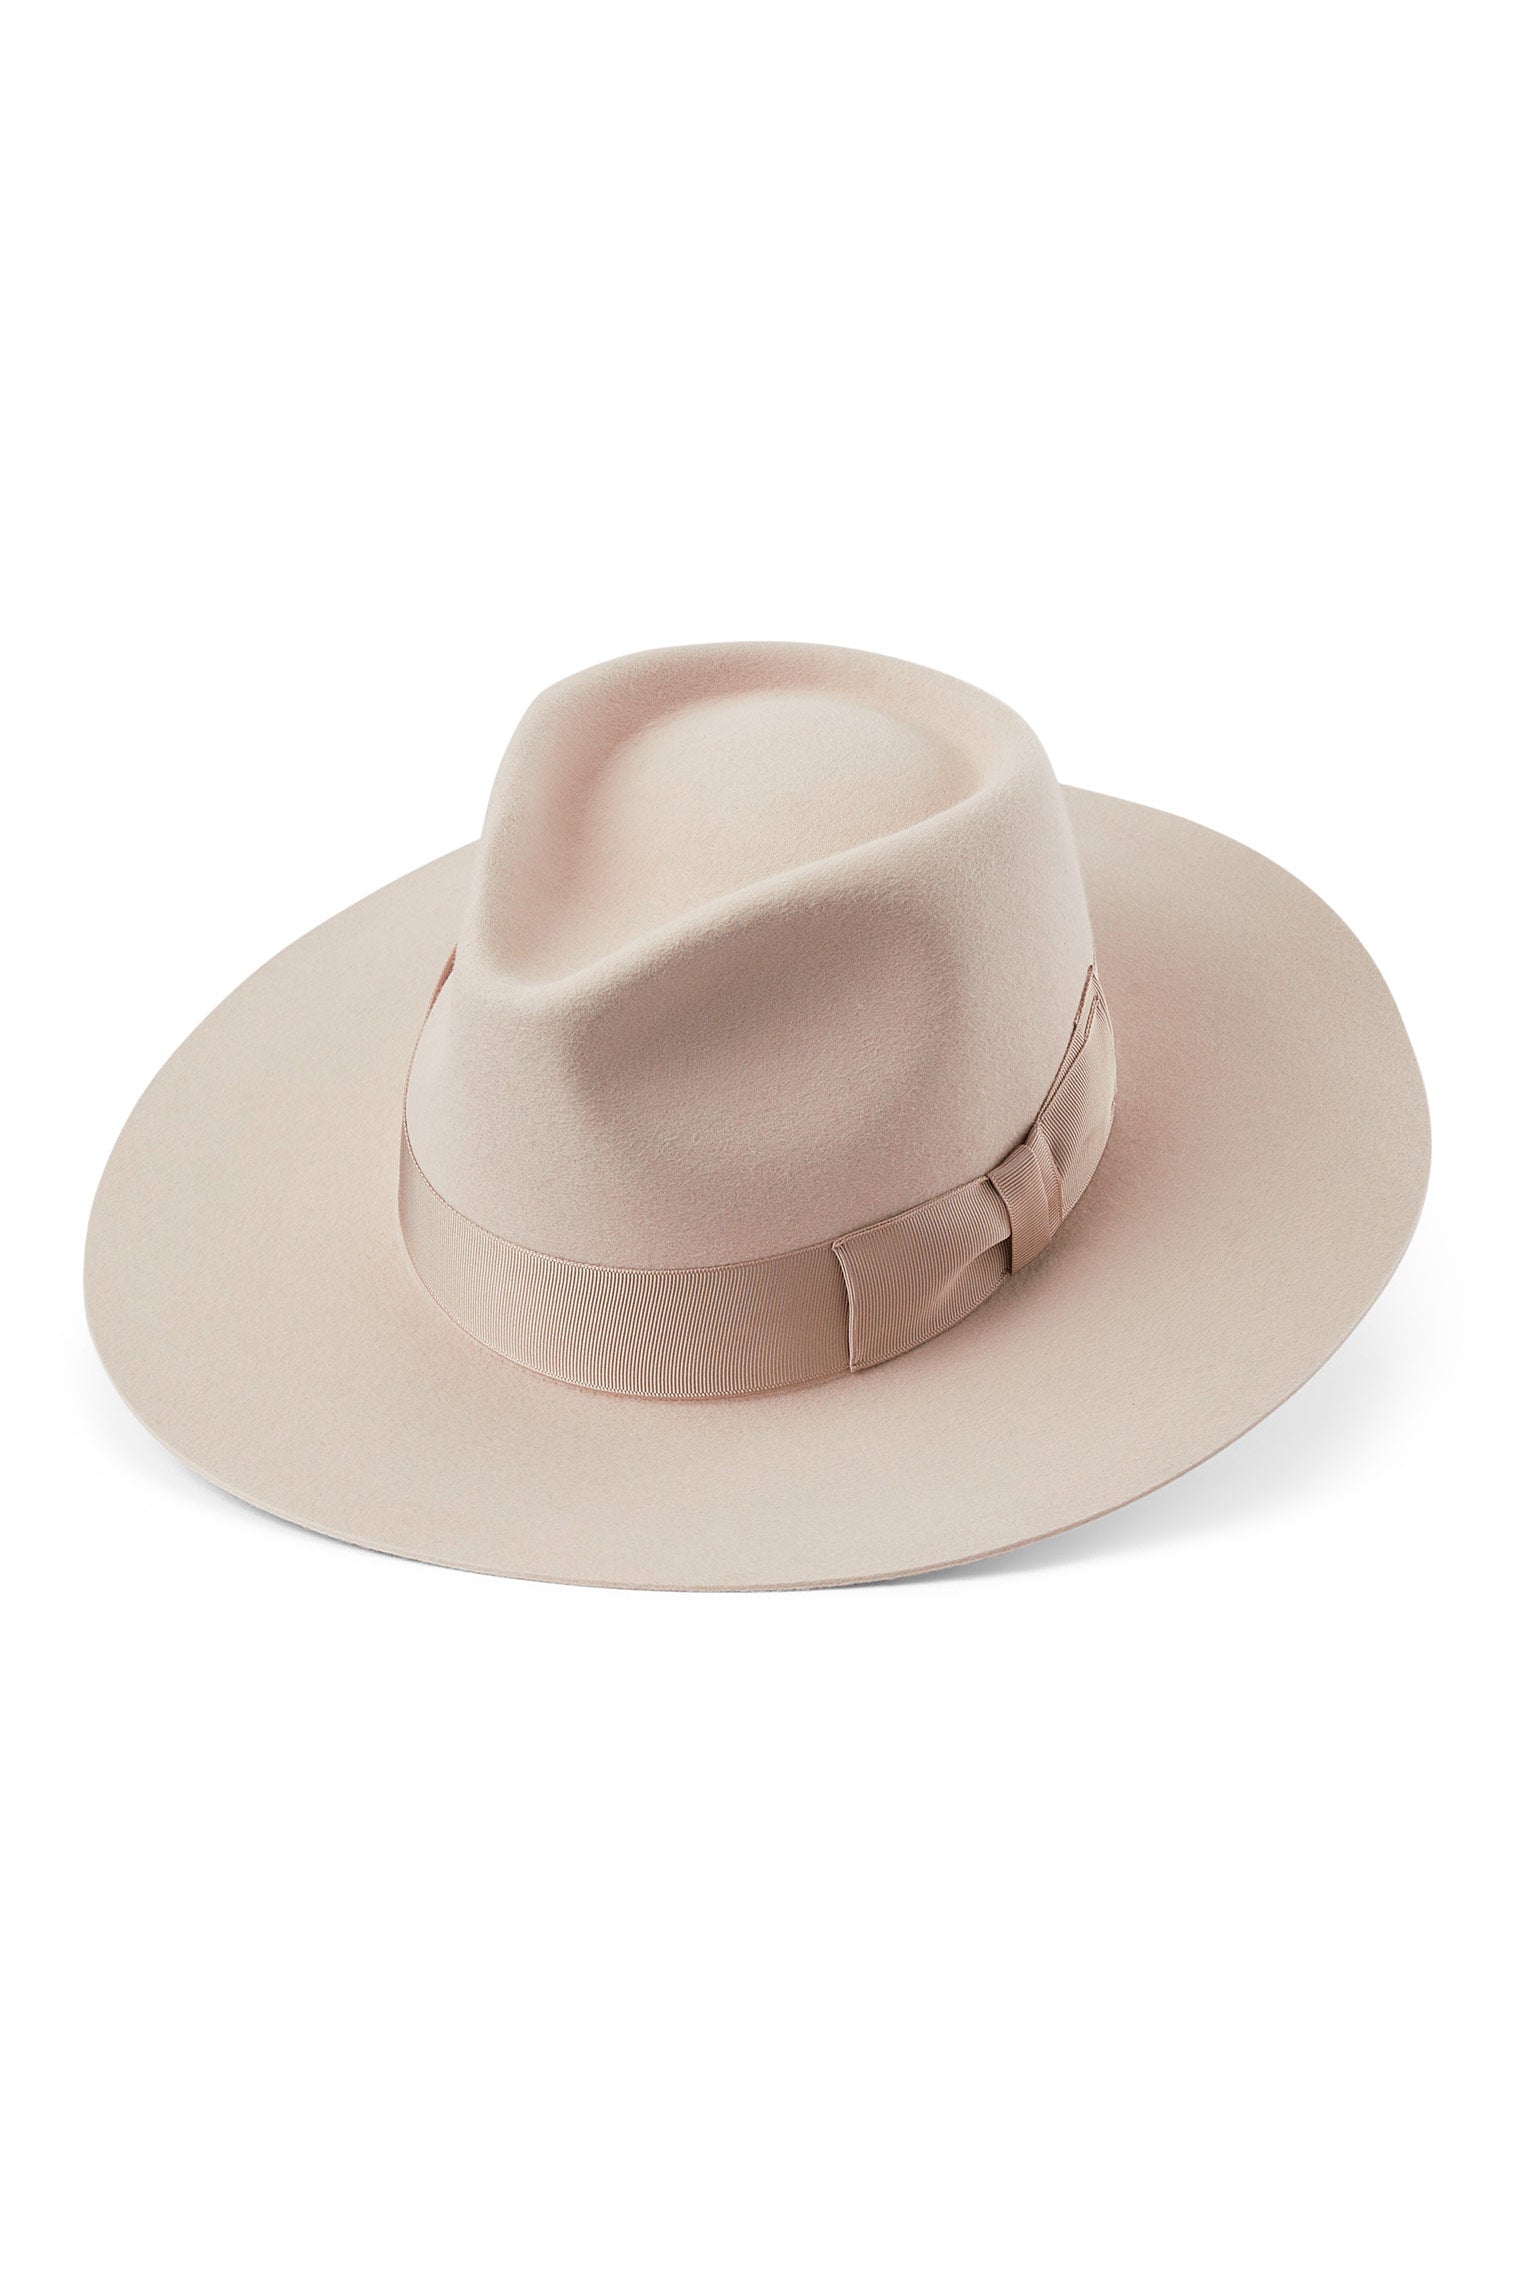 Toni Cream Flat-Brim Fedora - New Season Hat Collection - Lock & Co. Hatters London UK